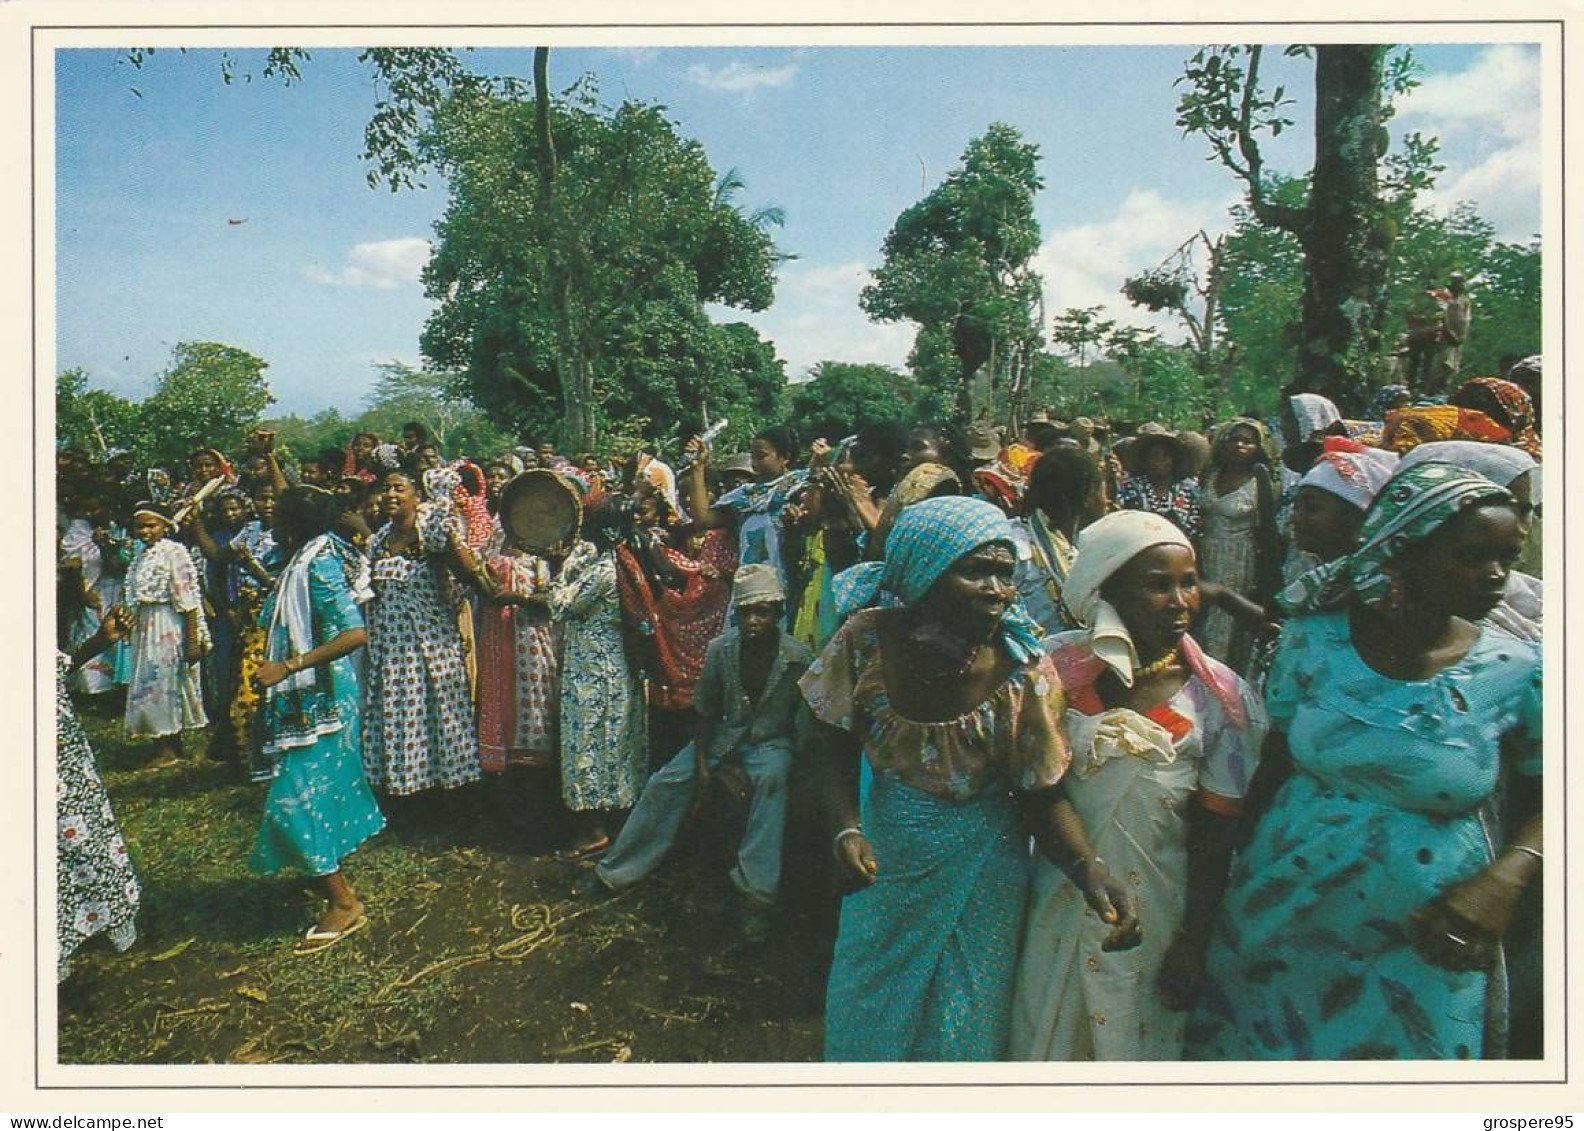 GRANDE COMORES NGAZIDJA DANSE DU PILON WADAHA + FEMMES EN FETE + PLAGE ET HOTEL ITSANDRA 1988 - Komoren